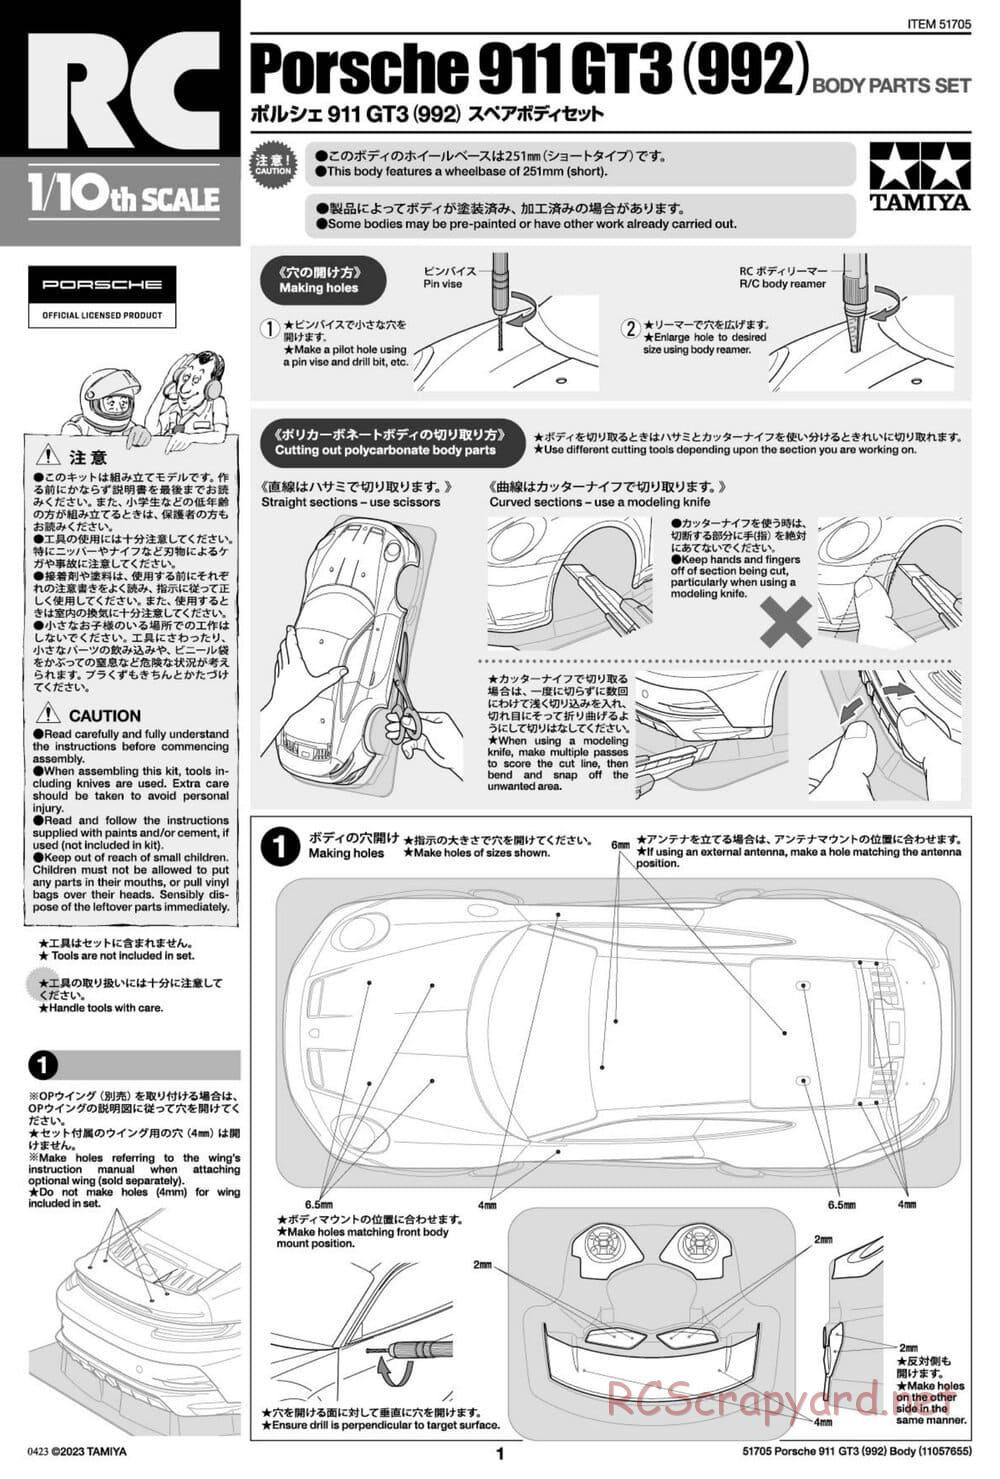 Tamiya - Porsche 911 GT3 (992) - TT-02 Chassis - Body Manual - Page 1